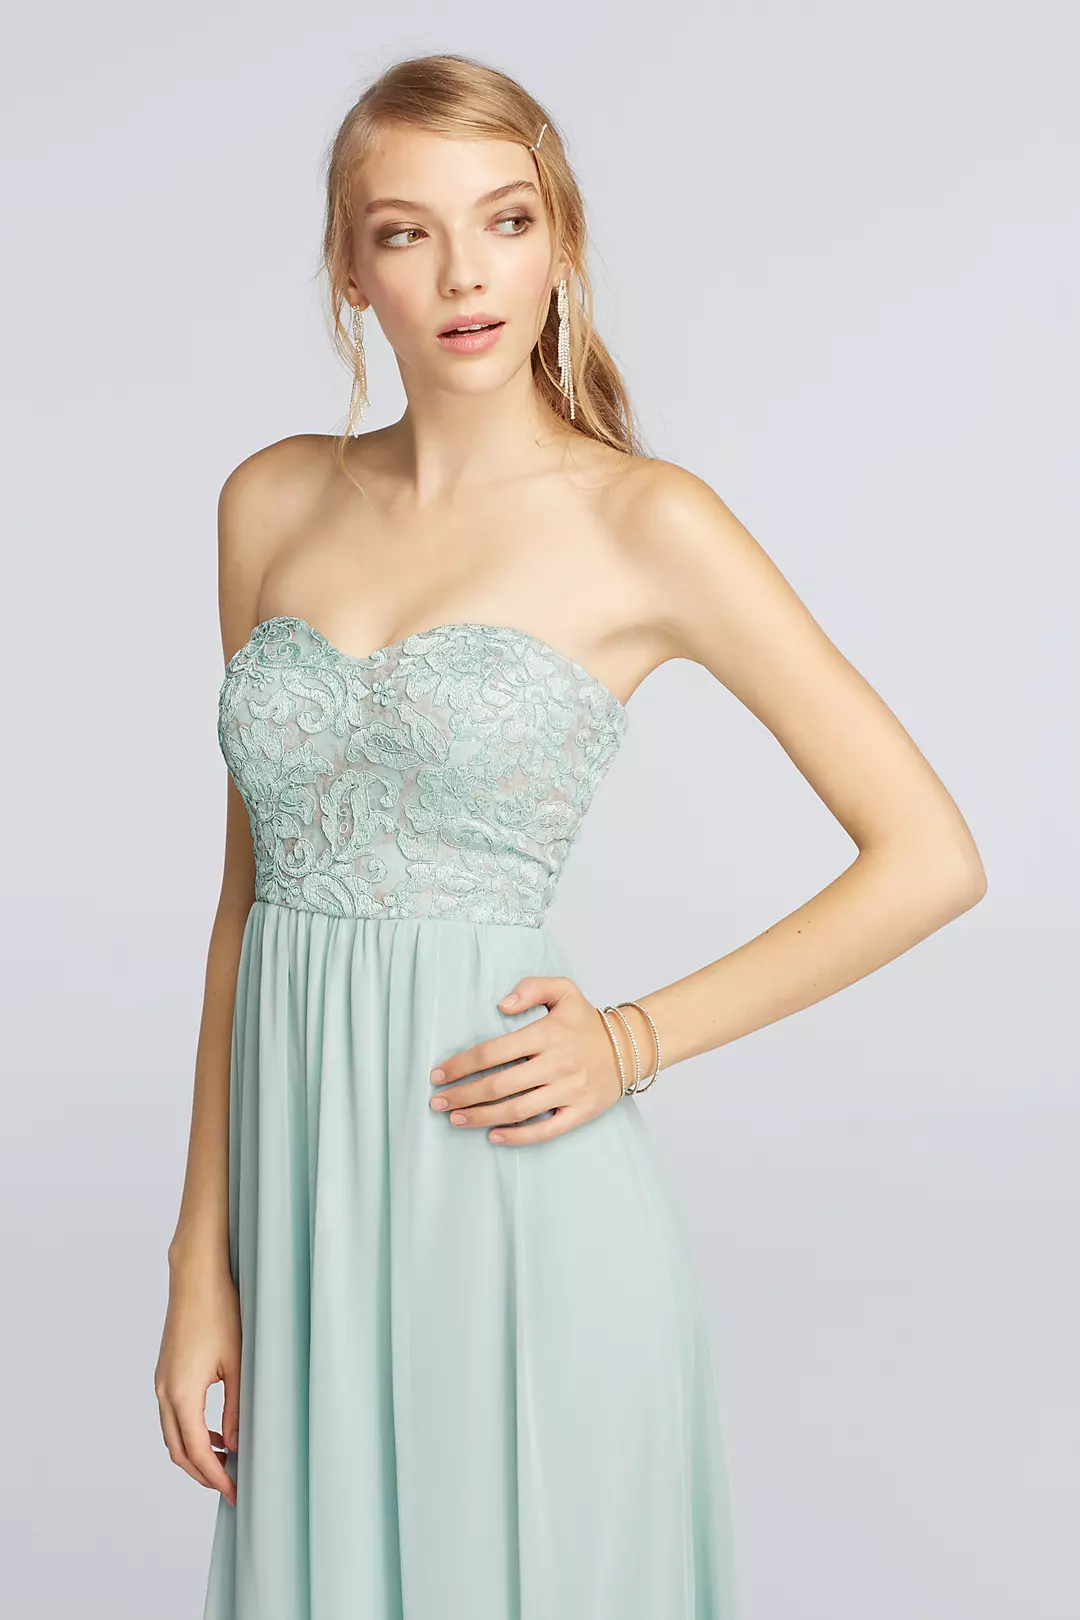 Strapless Chiffon Prom Dress with Lace Bodice Image 3